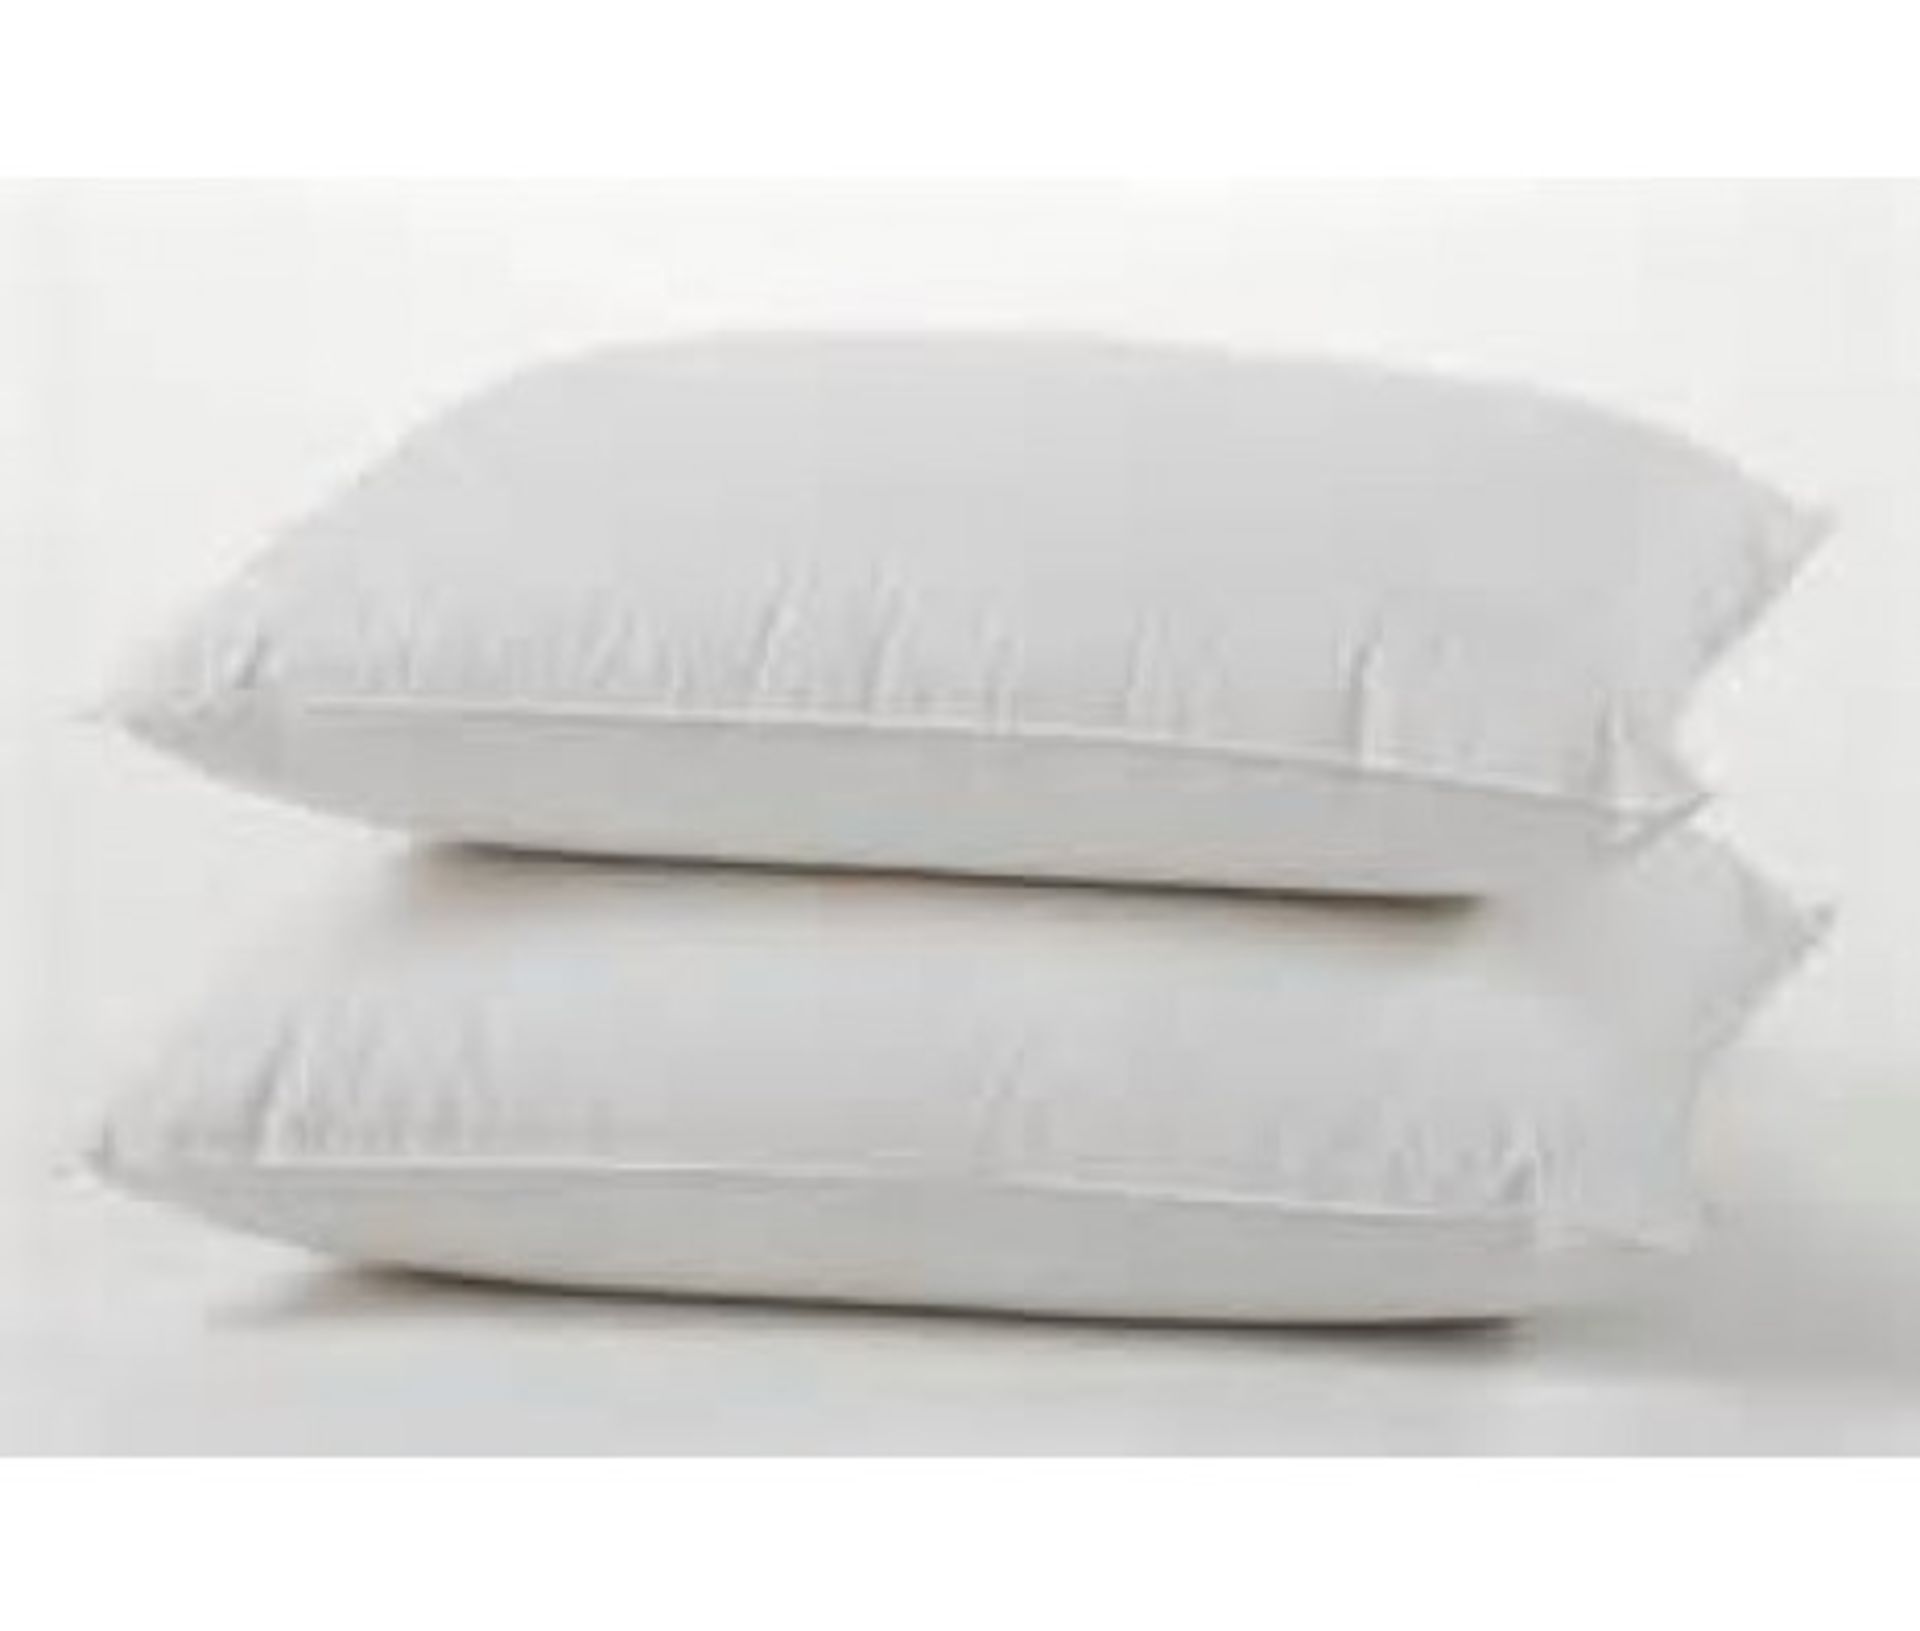 V Brand New Twin Pack Duck Feather & Down Pillows Similar To Debenhams ISP £36 (Debenhams) X 2